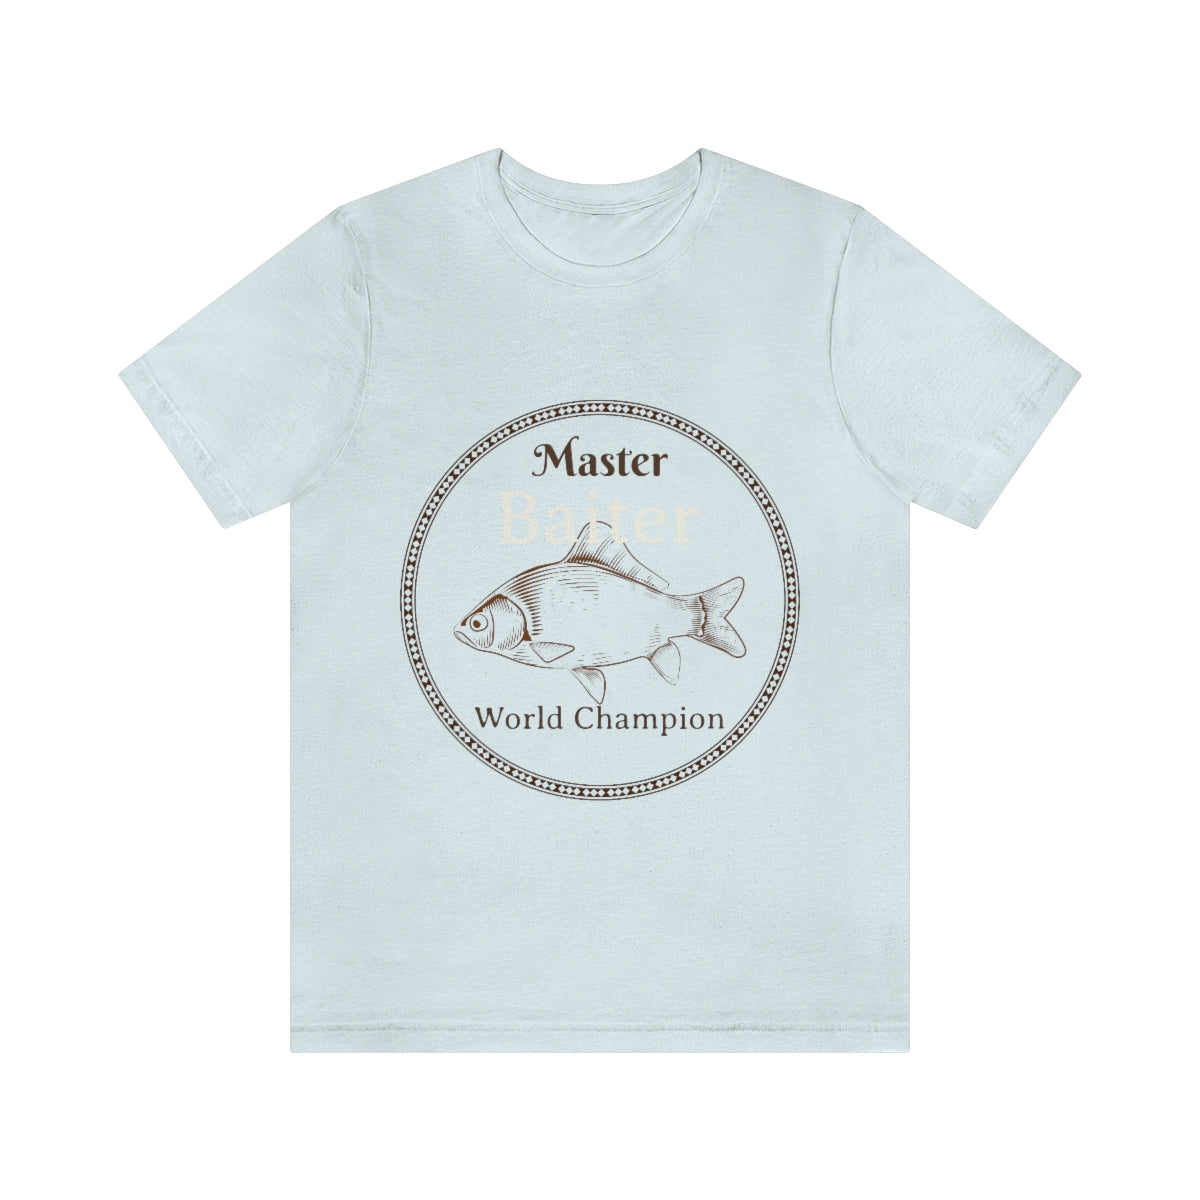 Master Baiter World Champion - Unisex T-Shirt